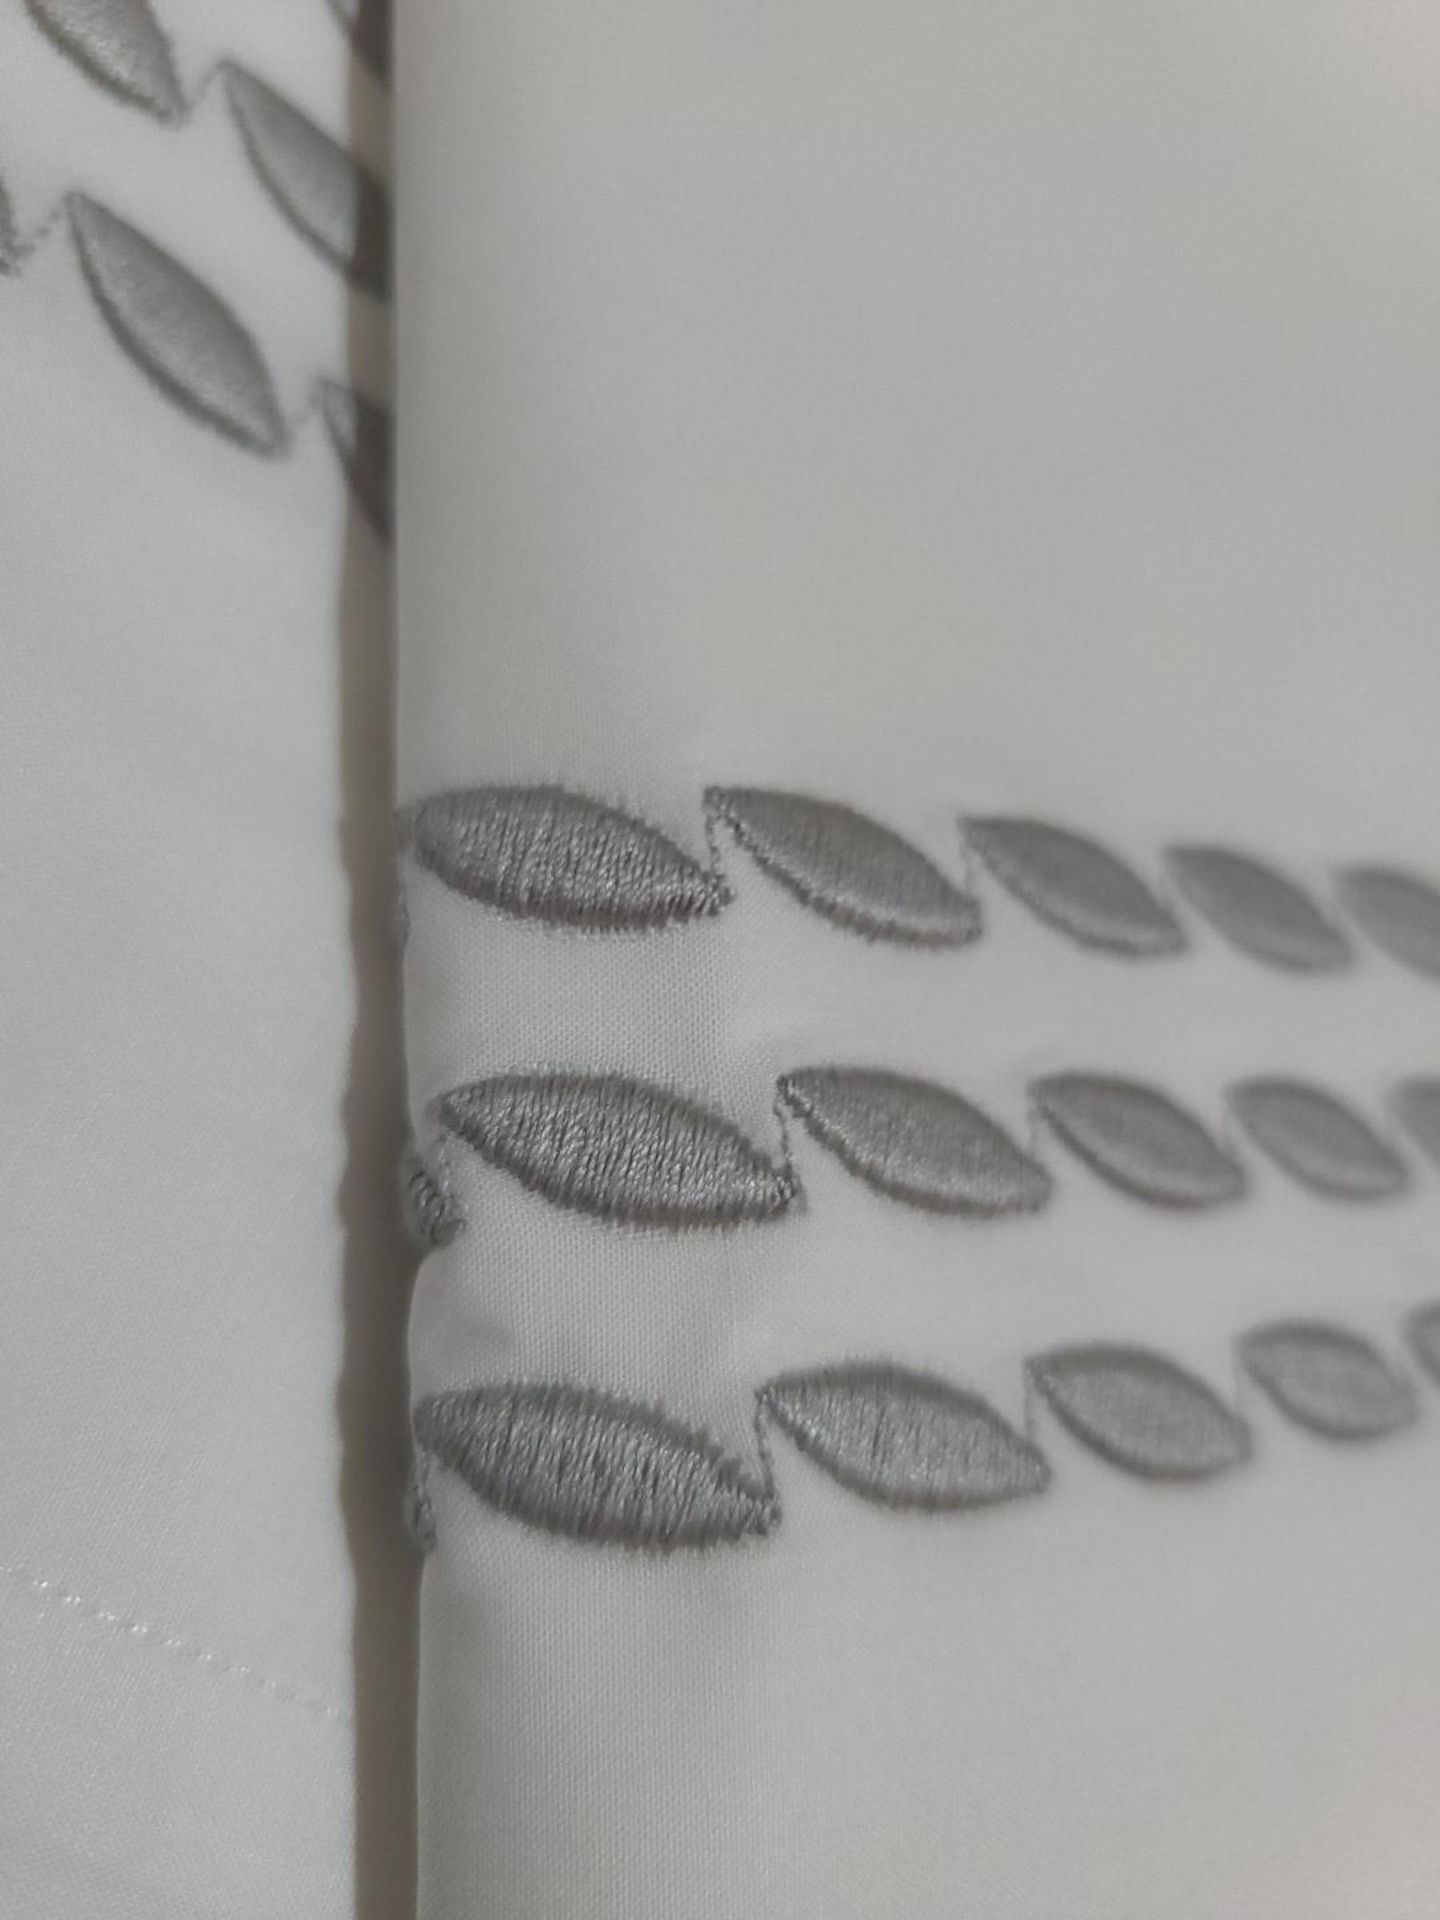 Set of 2 PRATESI Pioggia Embroidery Pillow Shaw 2 50x75cm- Original Price £570.00 - Unused Boxed - Image 2 of 6